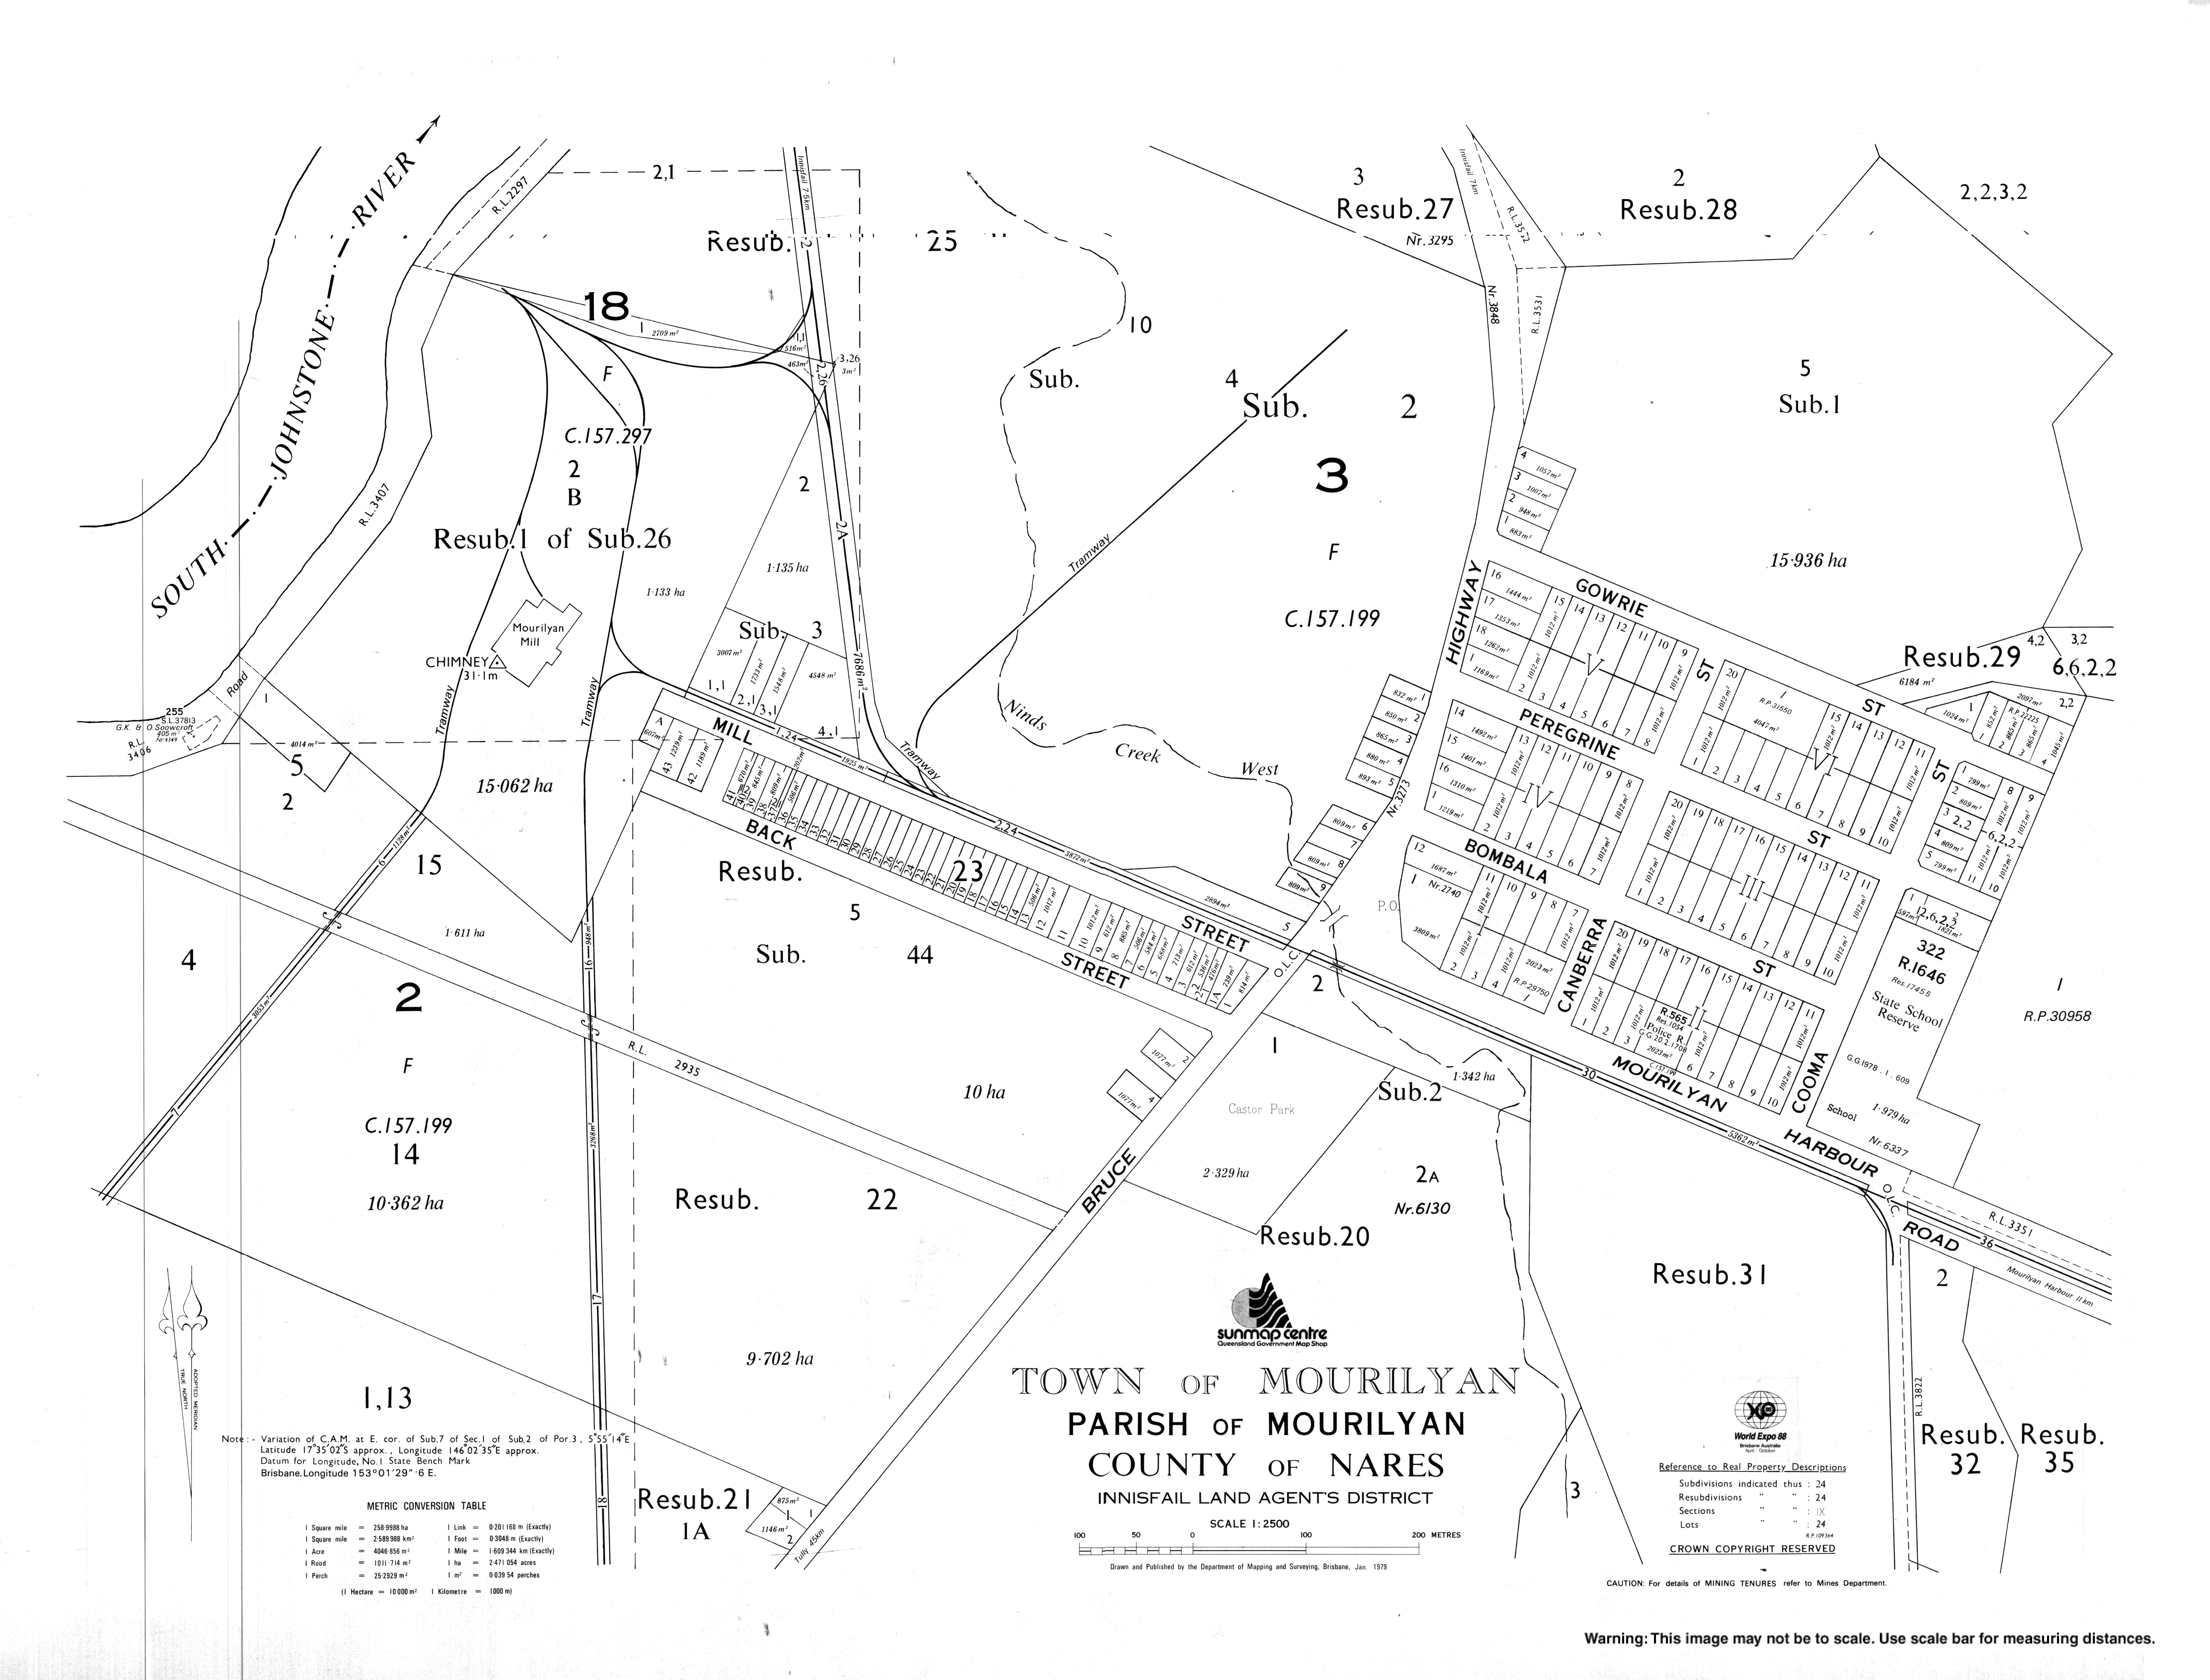 https://gisservices.information.qld.gov.au/arcgis/rest/directories/historicalscans/cad_scans/cad-map-town-mourilyan-1979.jpg